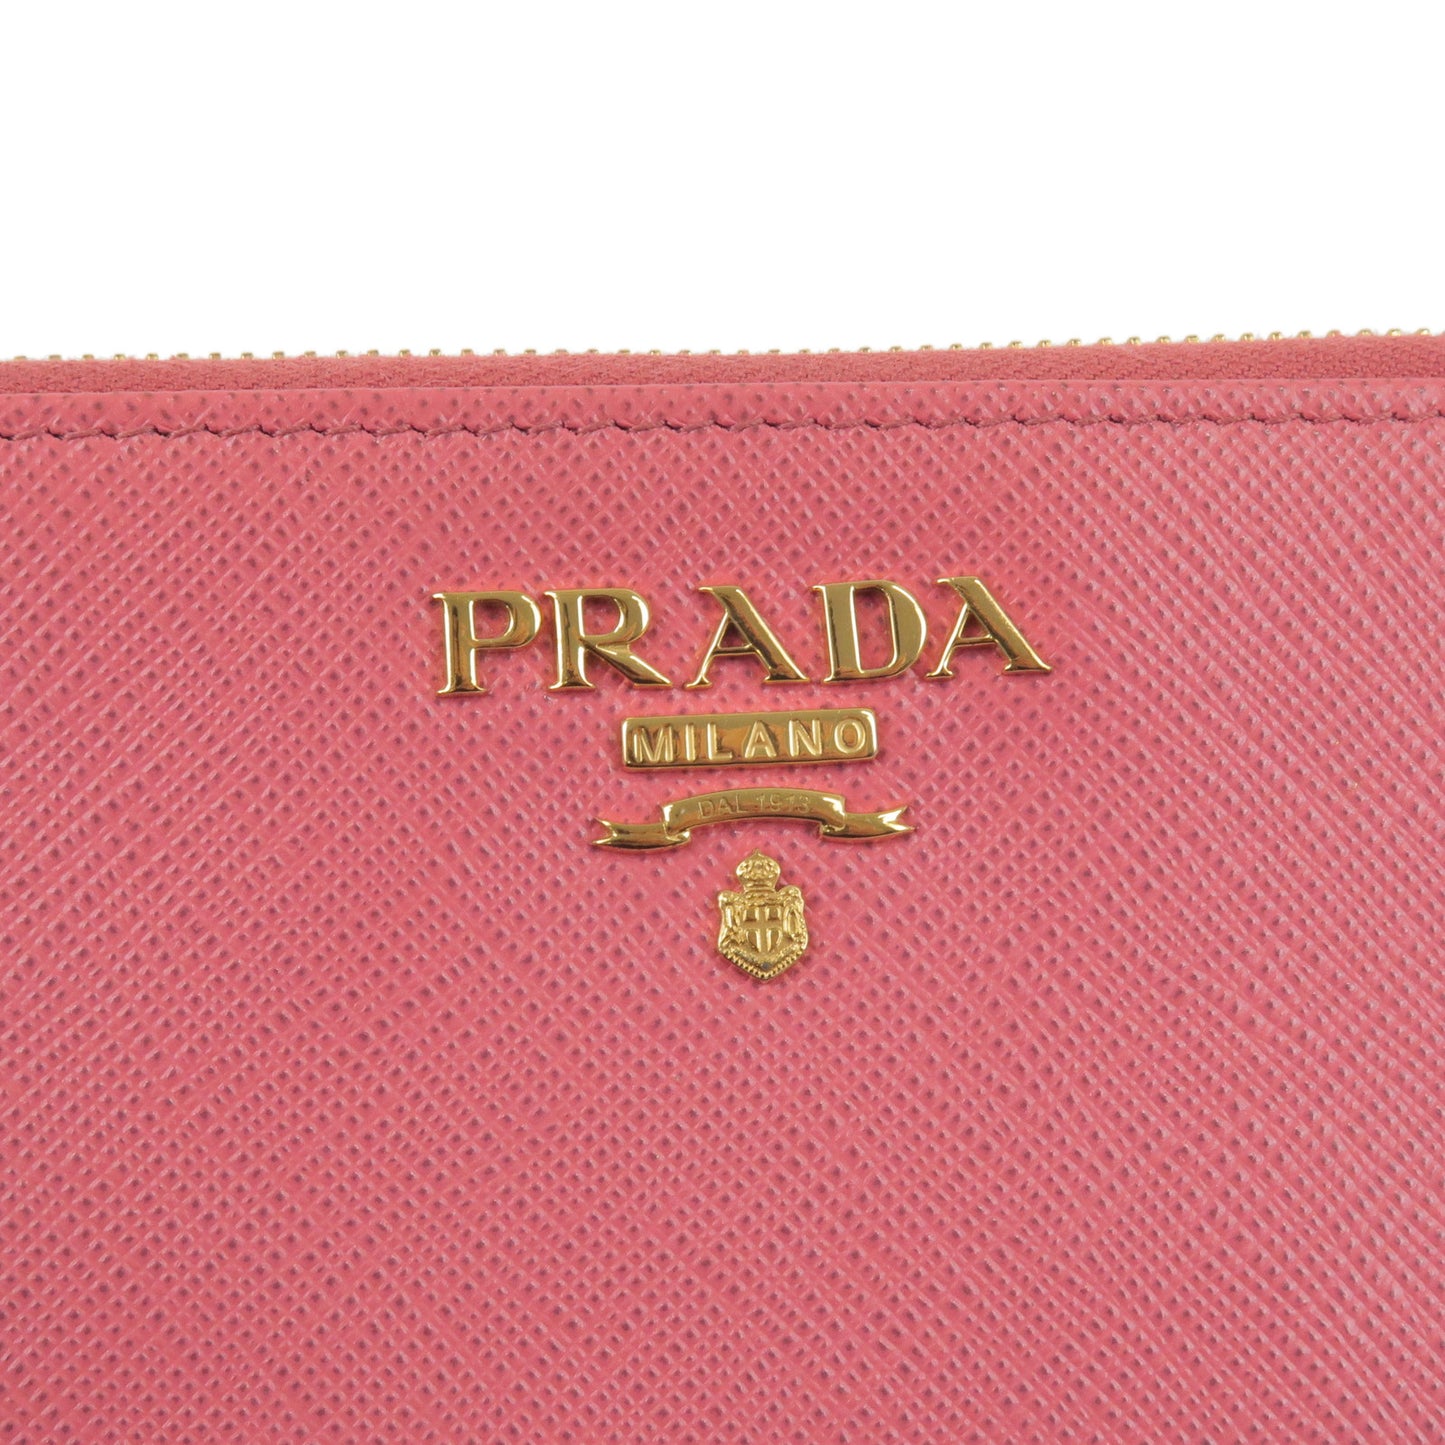 PRADA Leather Fragment Card Case Coin Case NERO Pink 1MC054